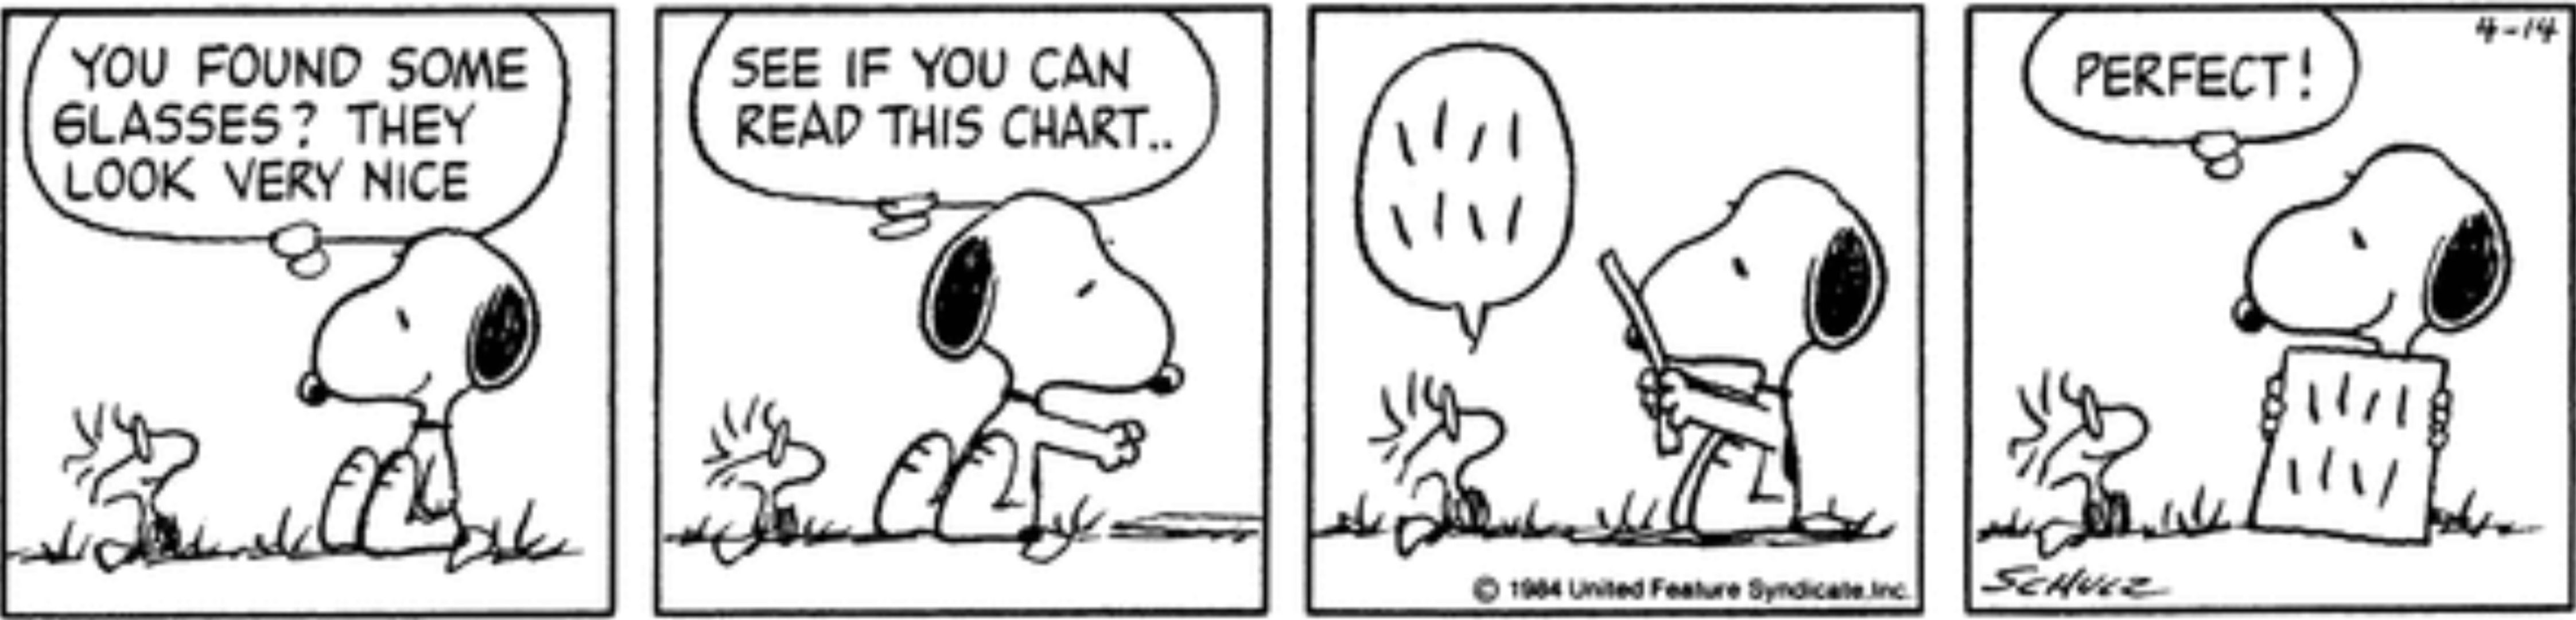 Snoopy giving Wodstock an eye exam in Peanuts.